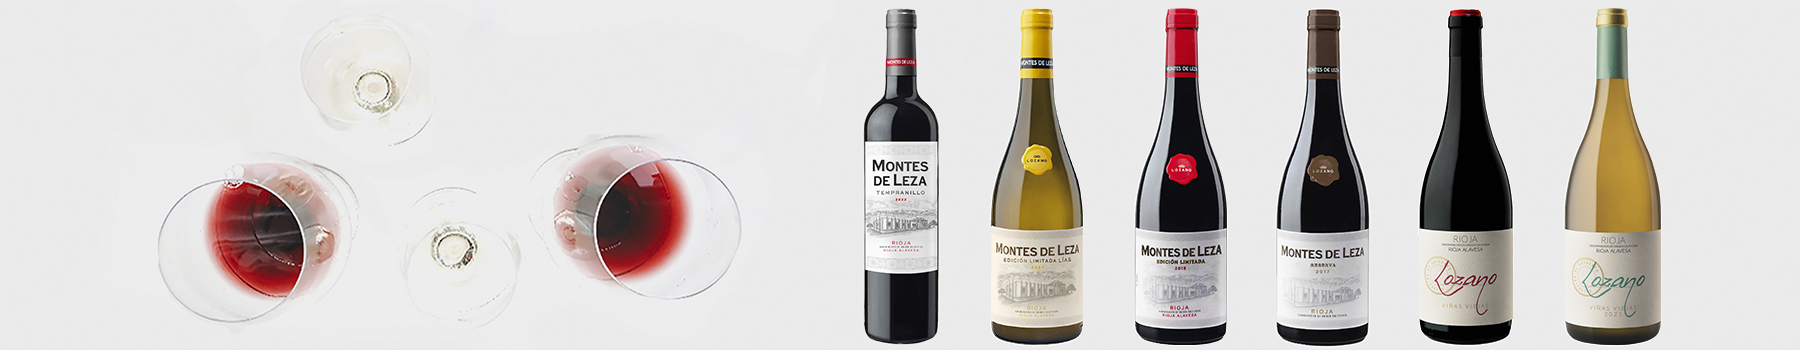 Enoturismo - Catas comentadas - Cata Rioja de 5 vinos + 1 - Bodegas Lozano